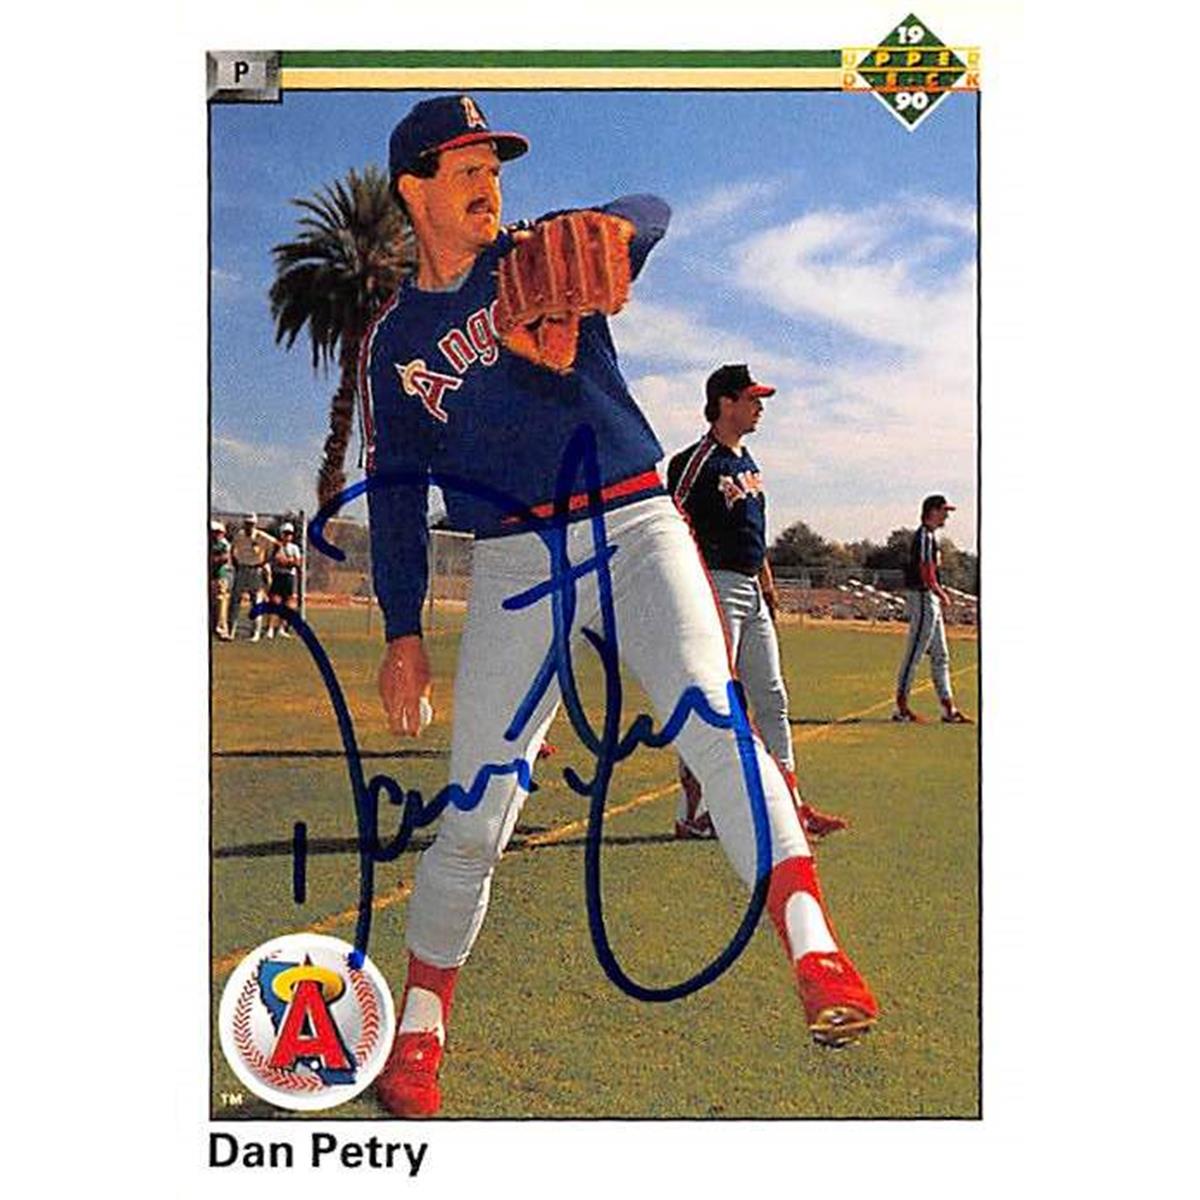 Autograph Warehouse 366134 Dan Petry Autographed Baseball Card - 1990 Upper Deck 690